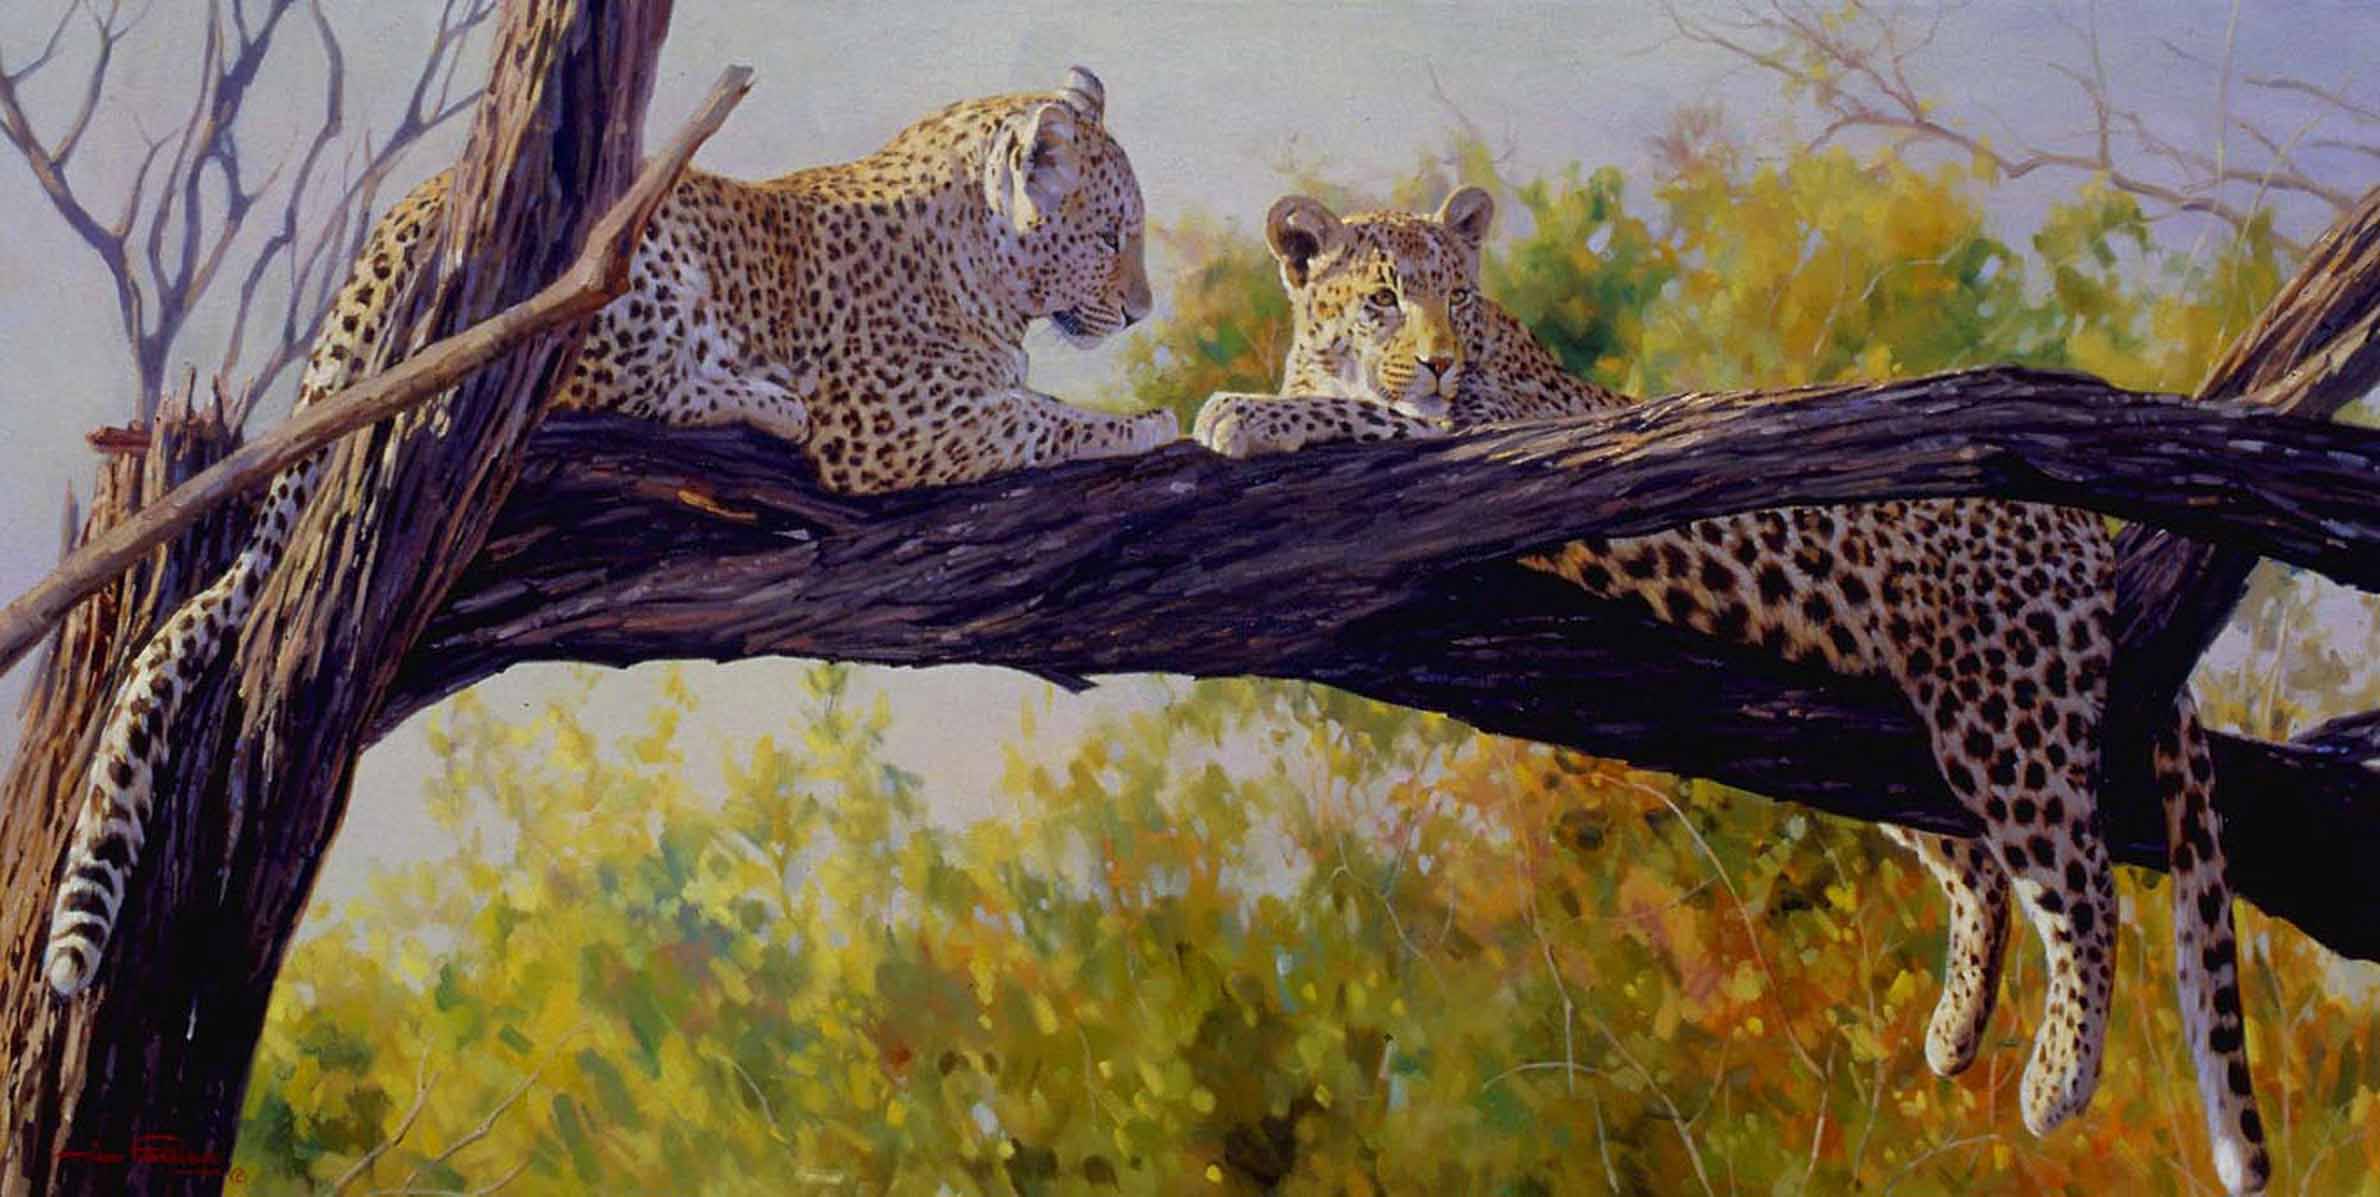 DP2 – Leopard Siblings © Dino Paravano